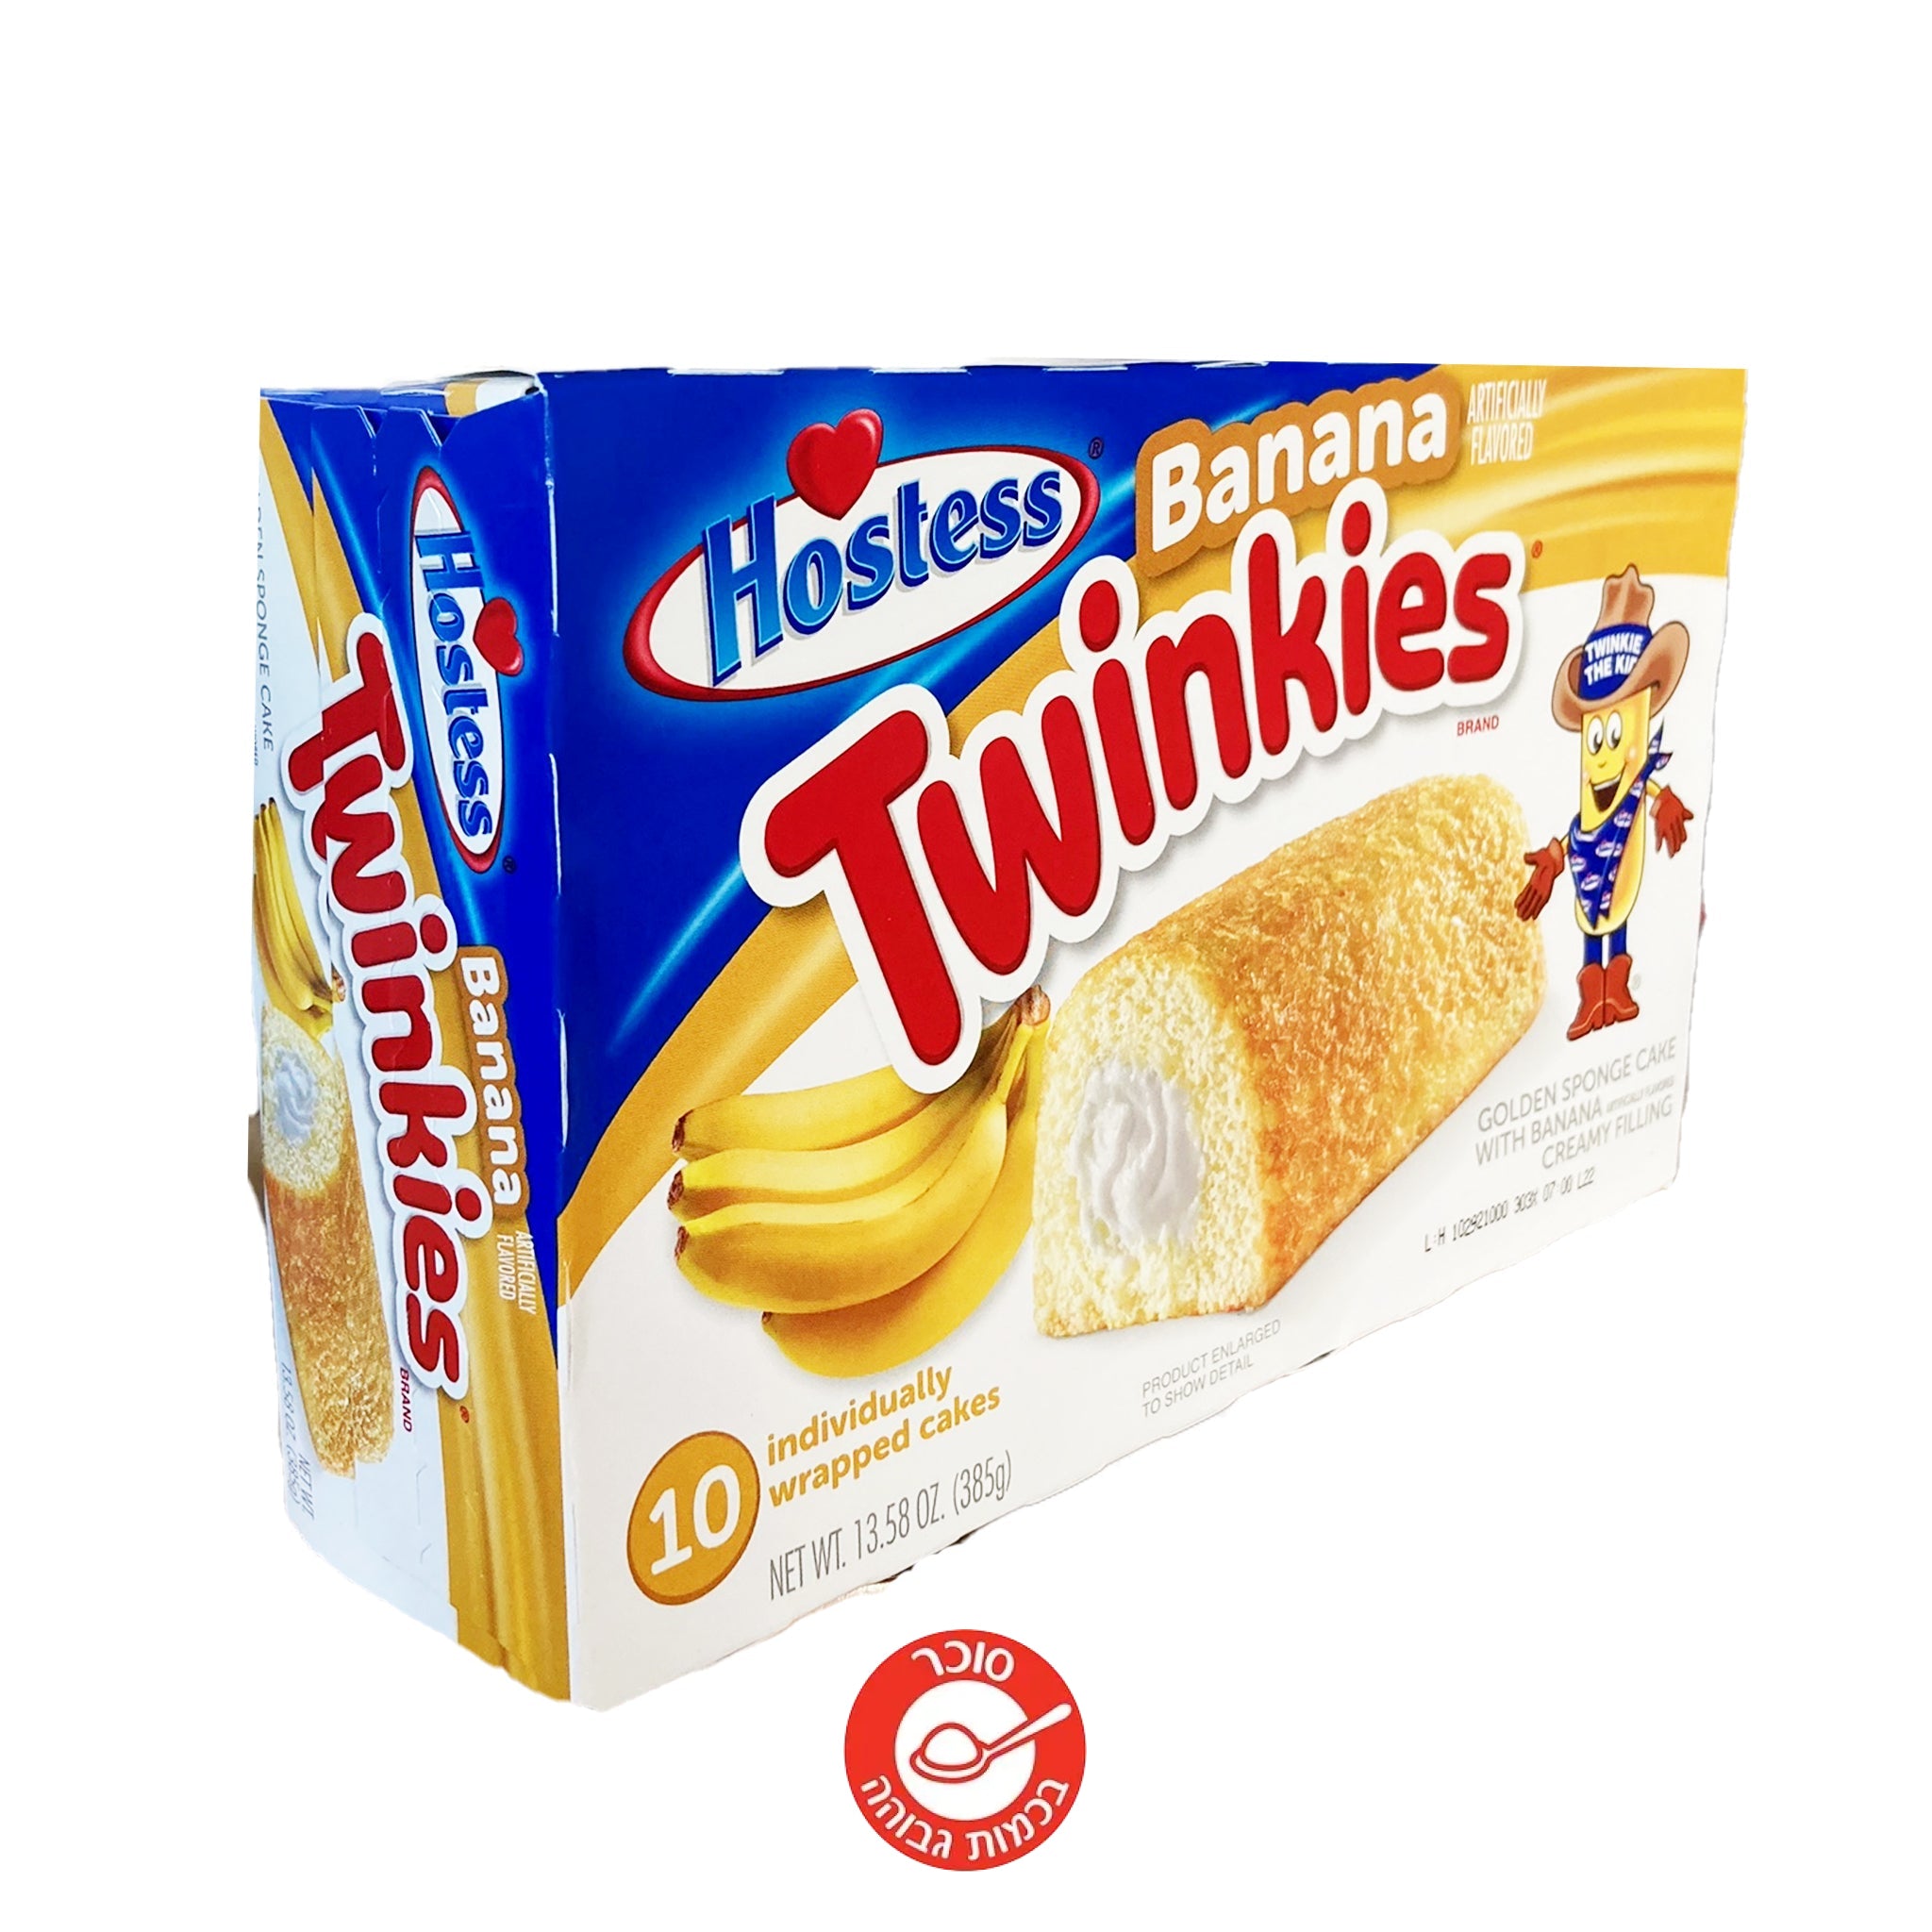 Twinkies banana עוגות טווינקיס בננה - טעימים